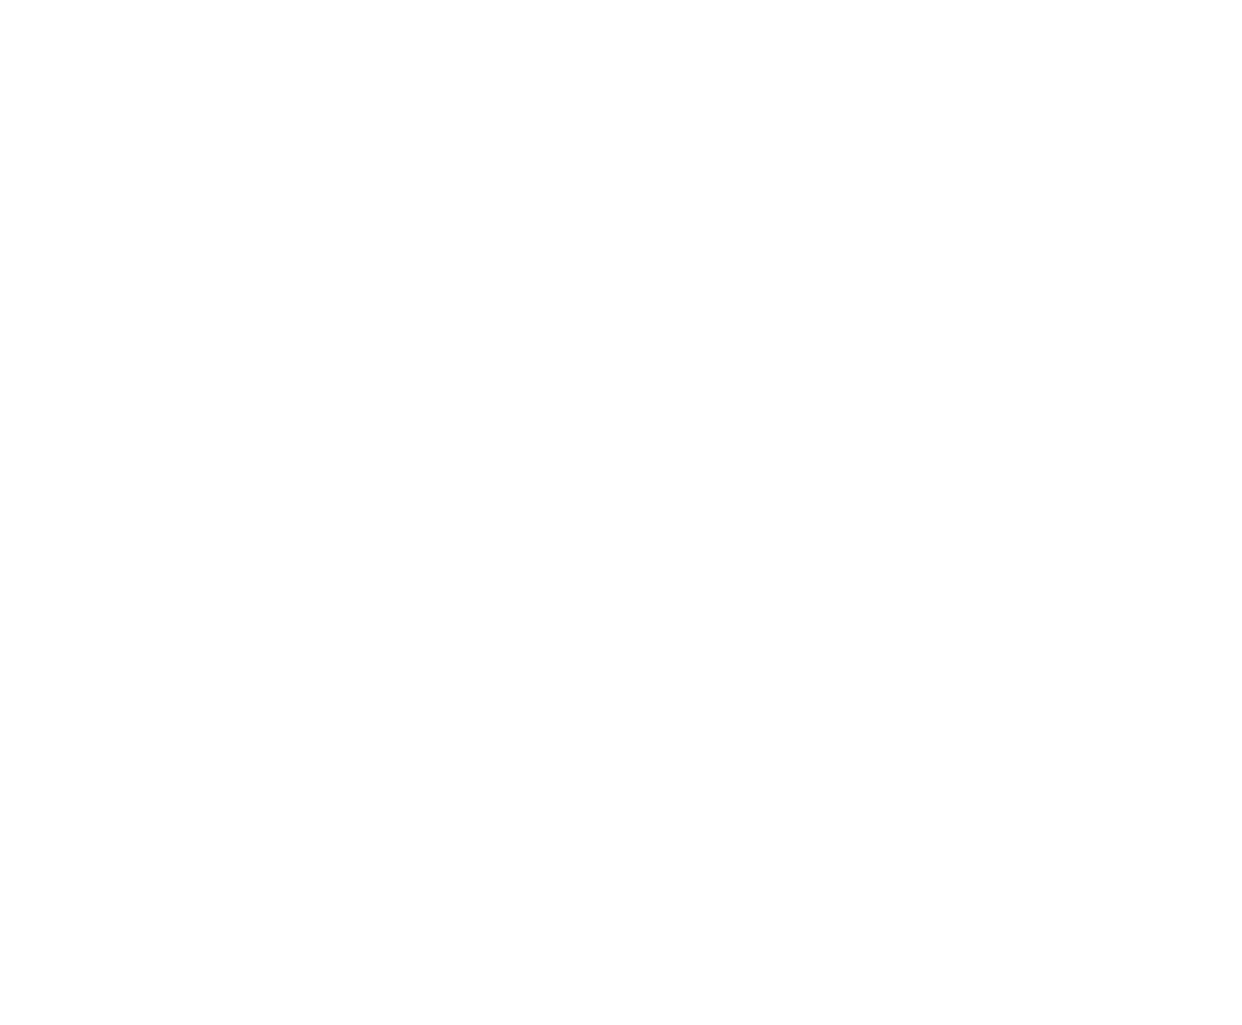 Mickey Mouse (film) | Idea Wi